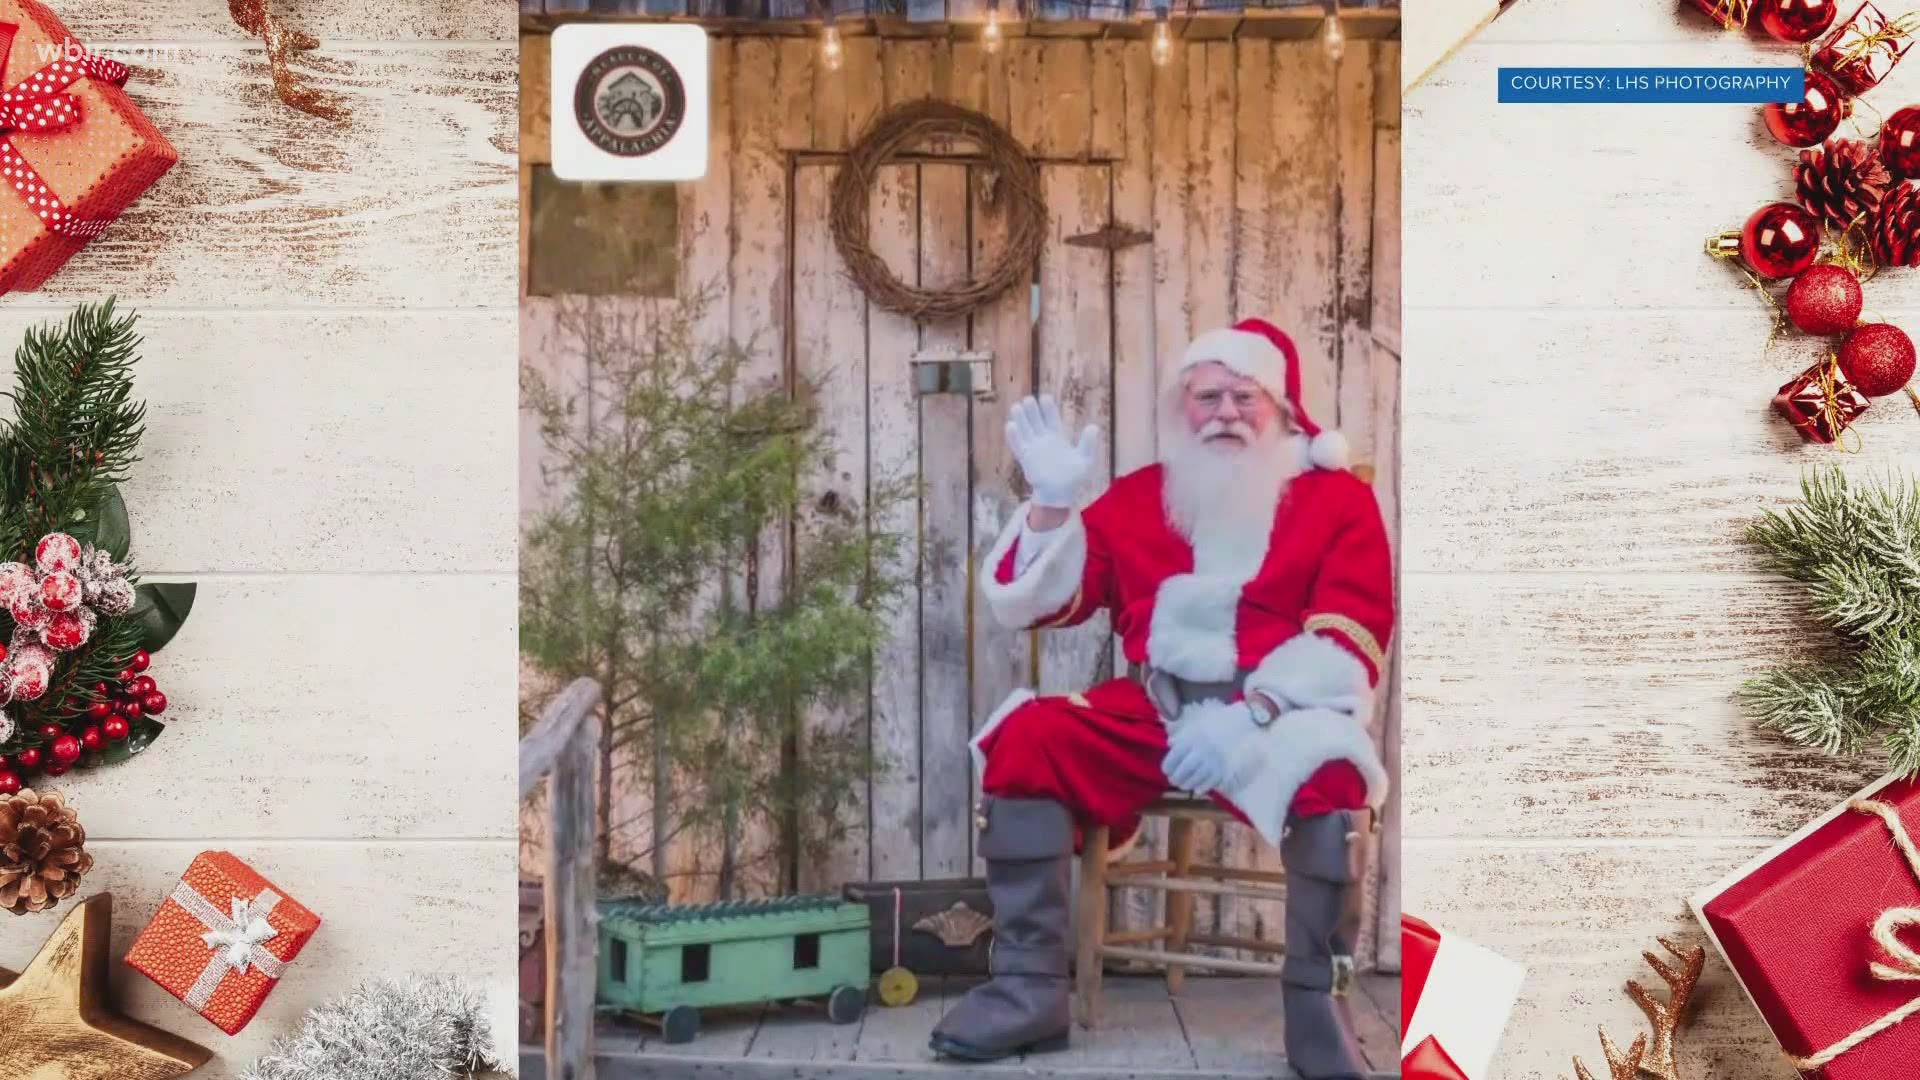 10News reporter Shannon Smith has your Santa outlook for the 2020 Christmas season